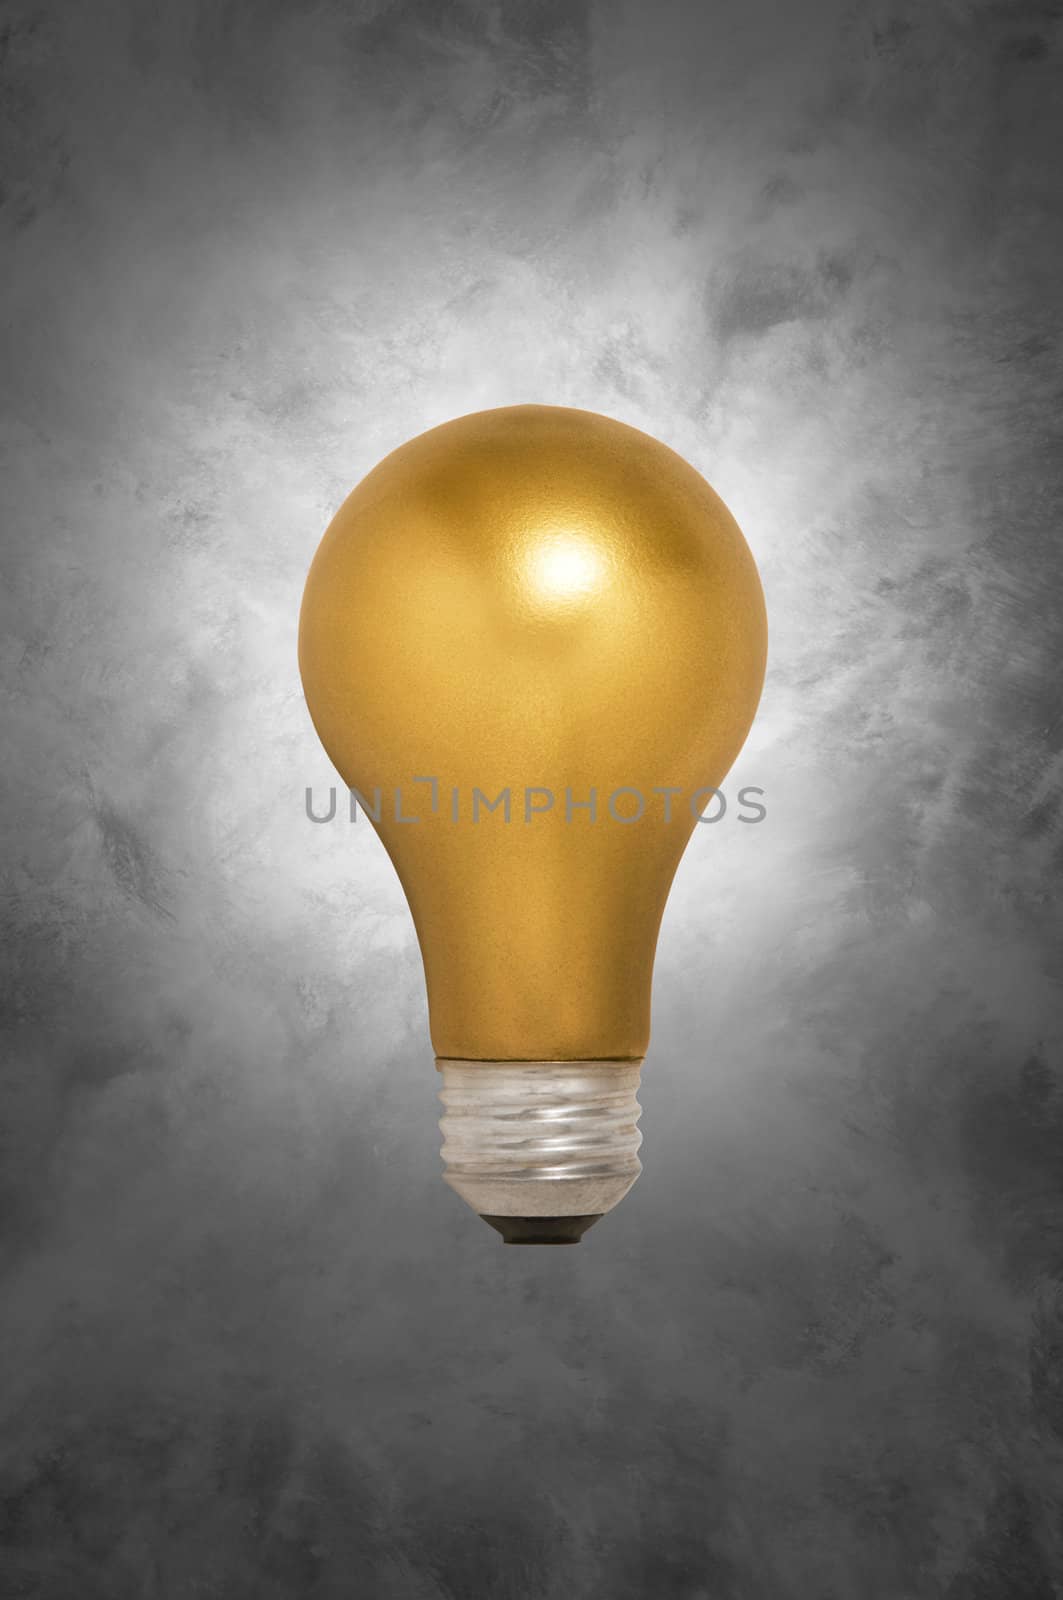 Gold light bulb floating against a gray mottled background